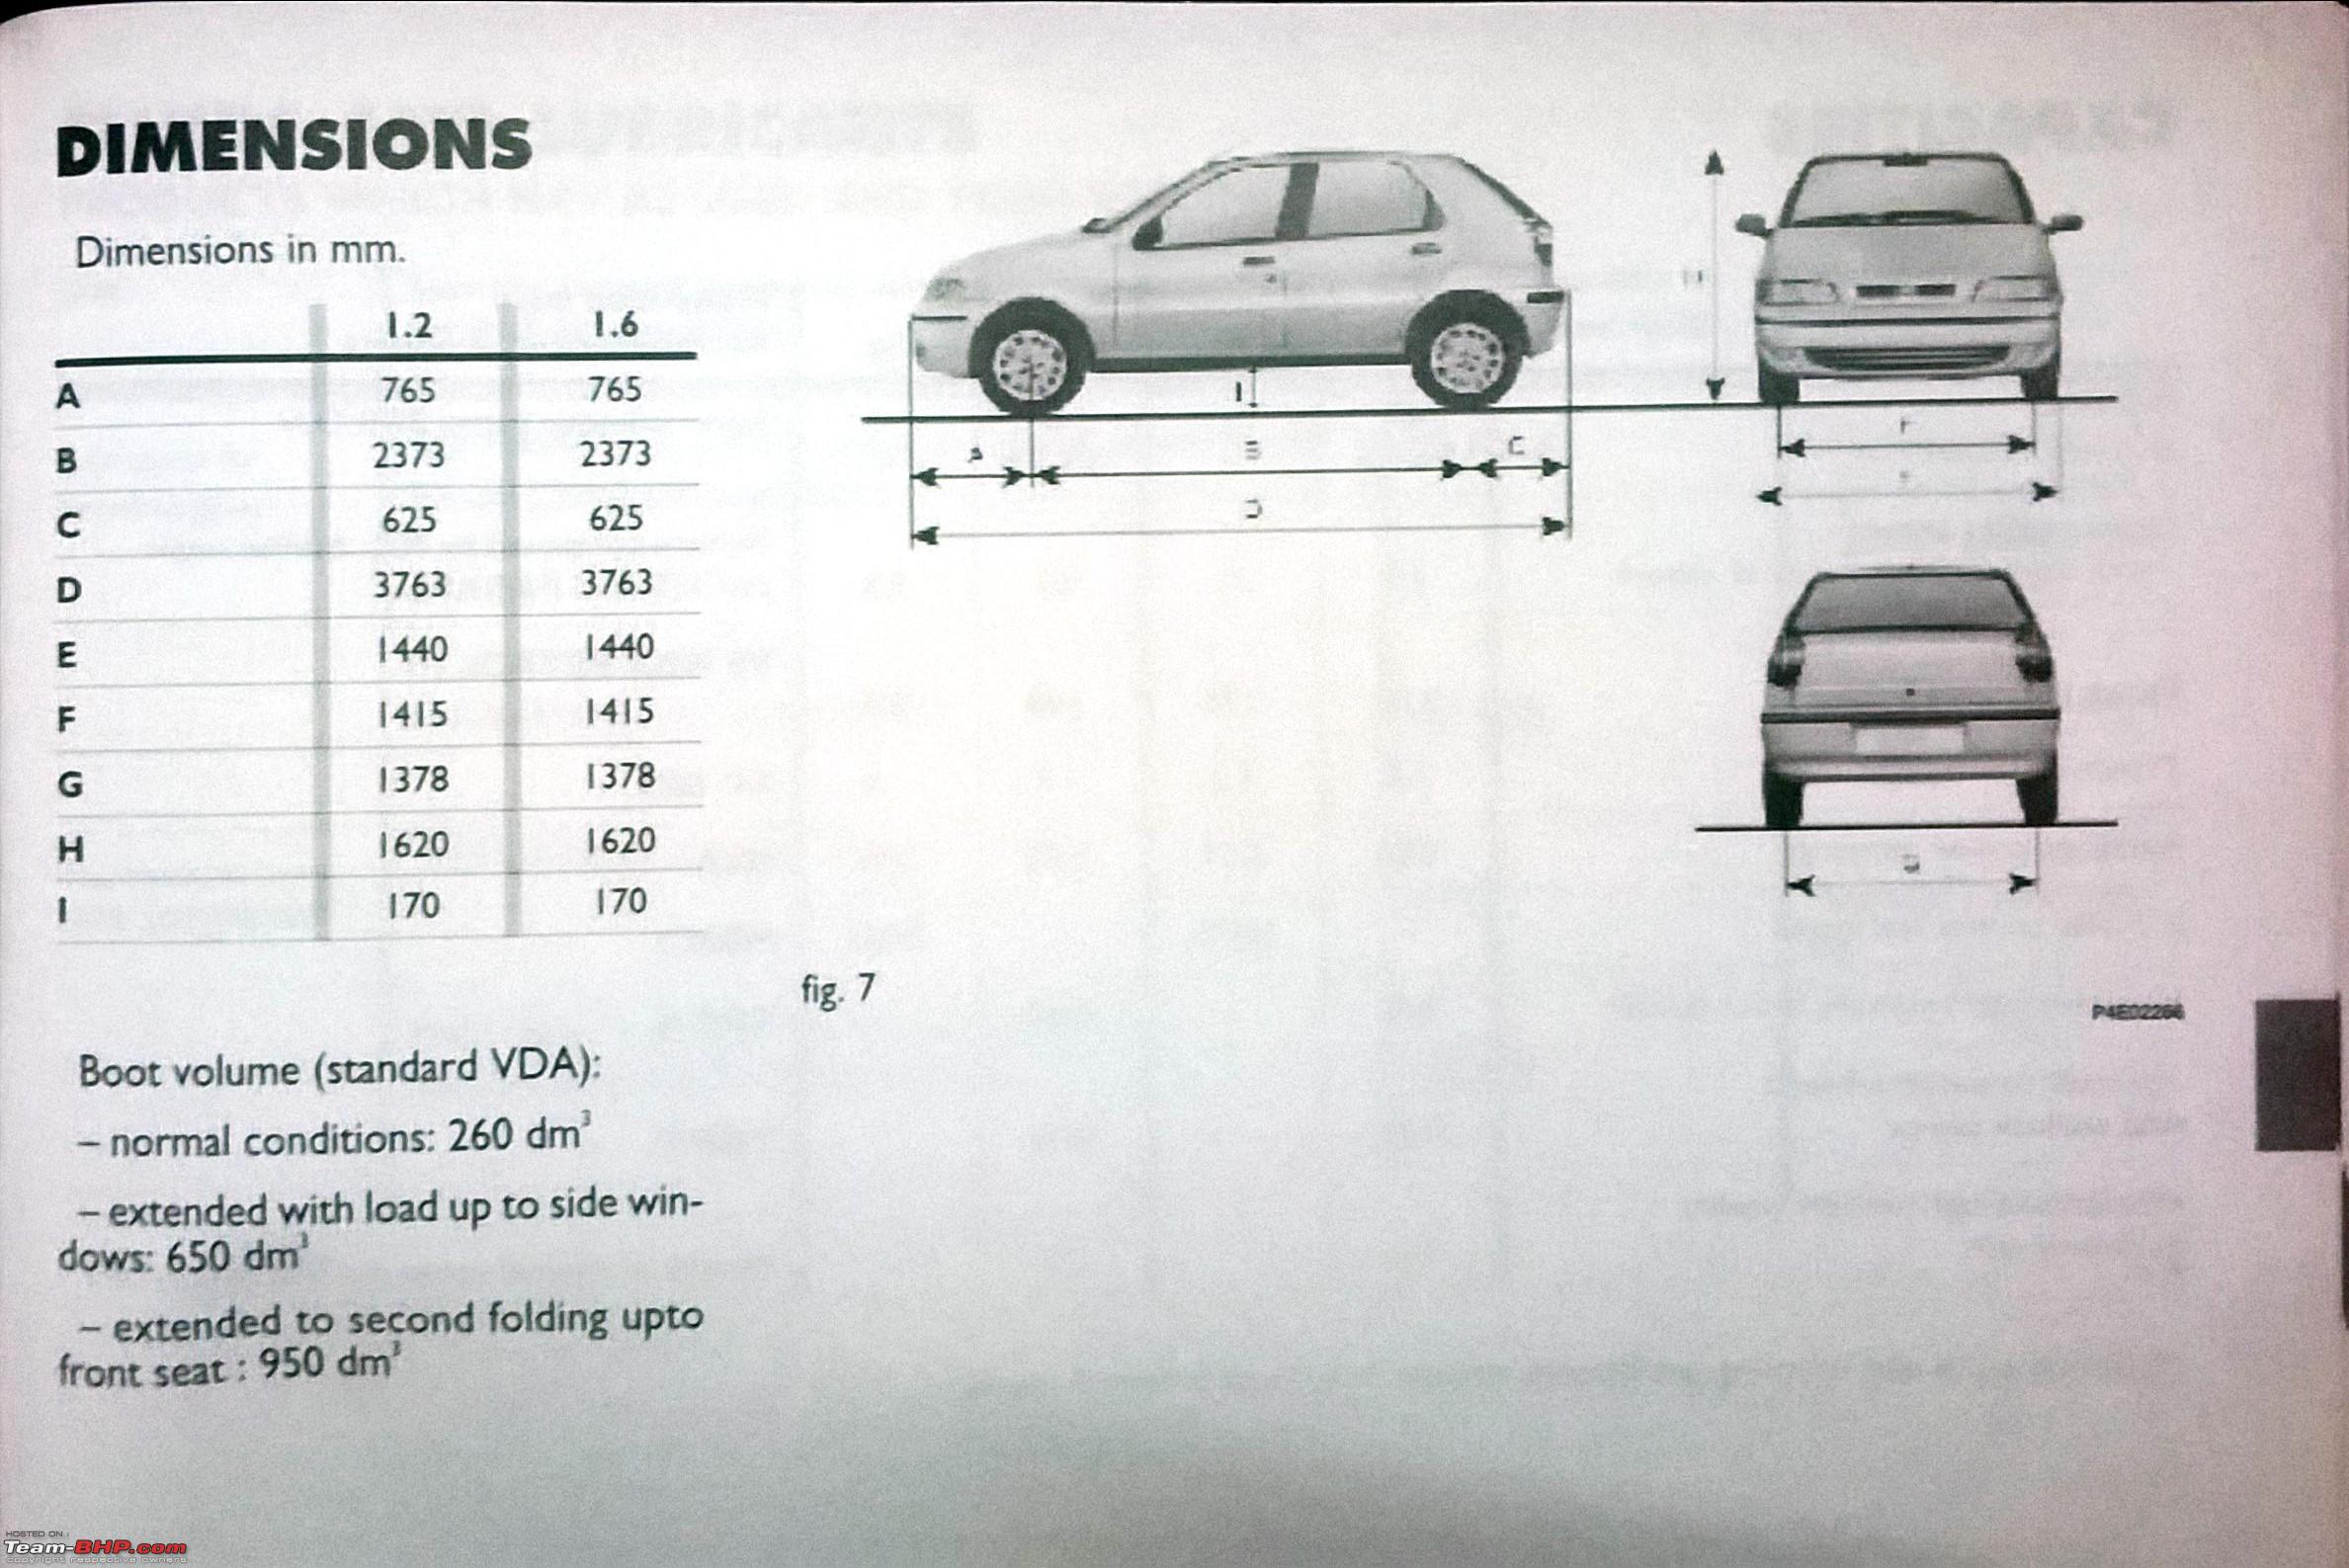 Fiat Palio Stile Specifications - Dimensions, Configurations, Features,  Engine cc